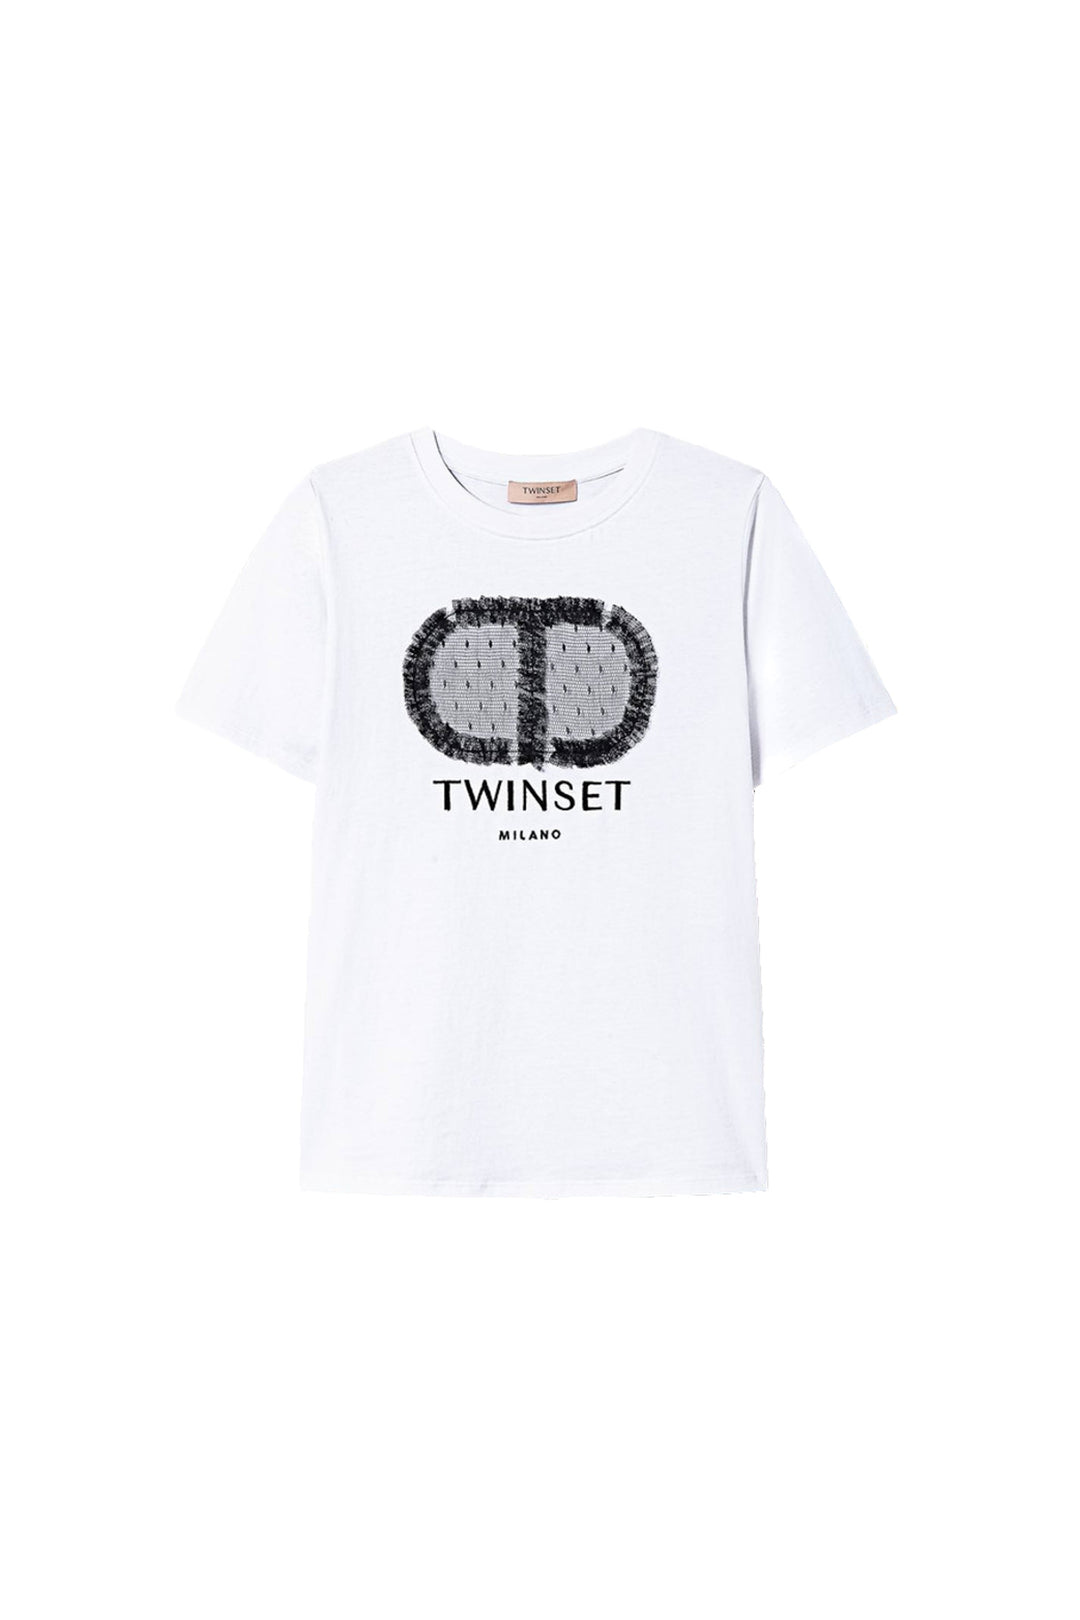 TWINSET T-shirt regular bianca con Oval T e pizzo - Mancinelli 1954